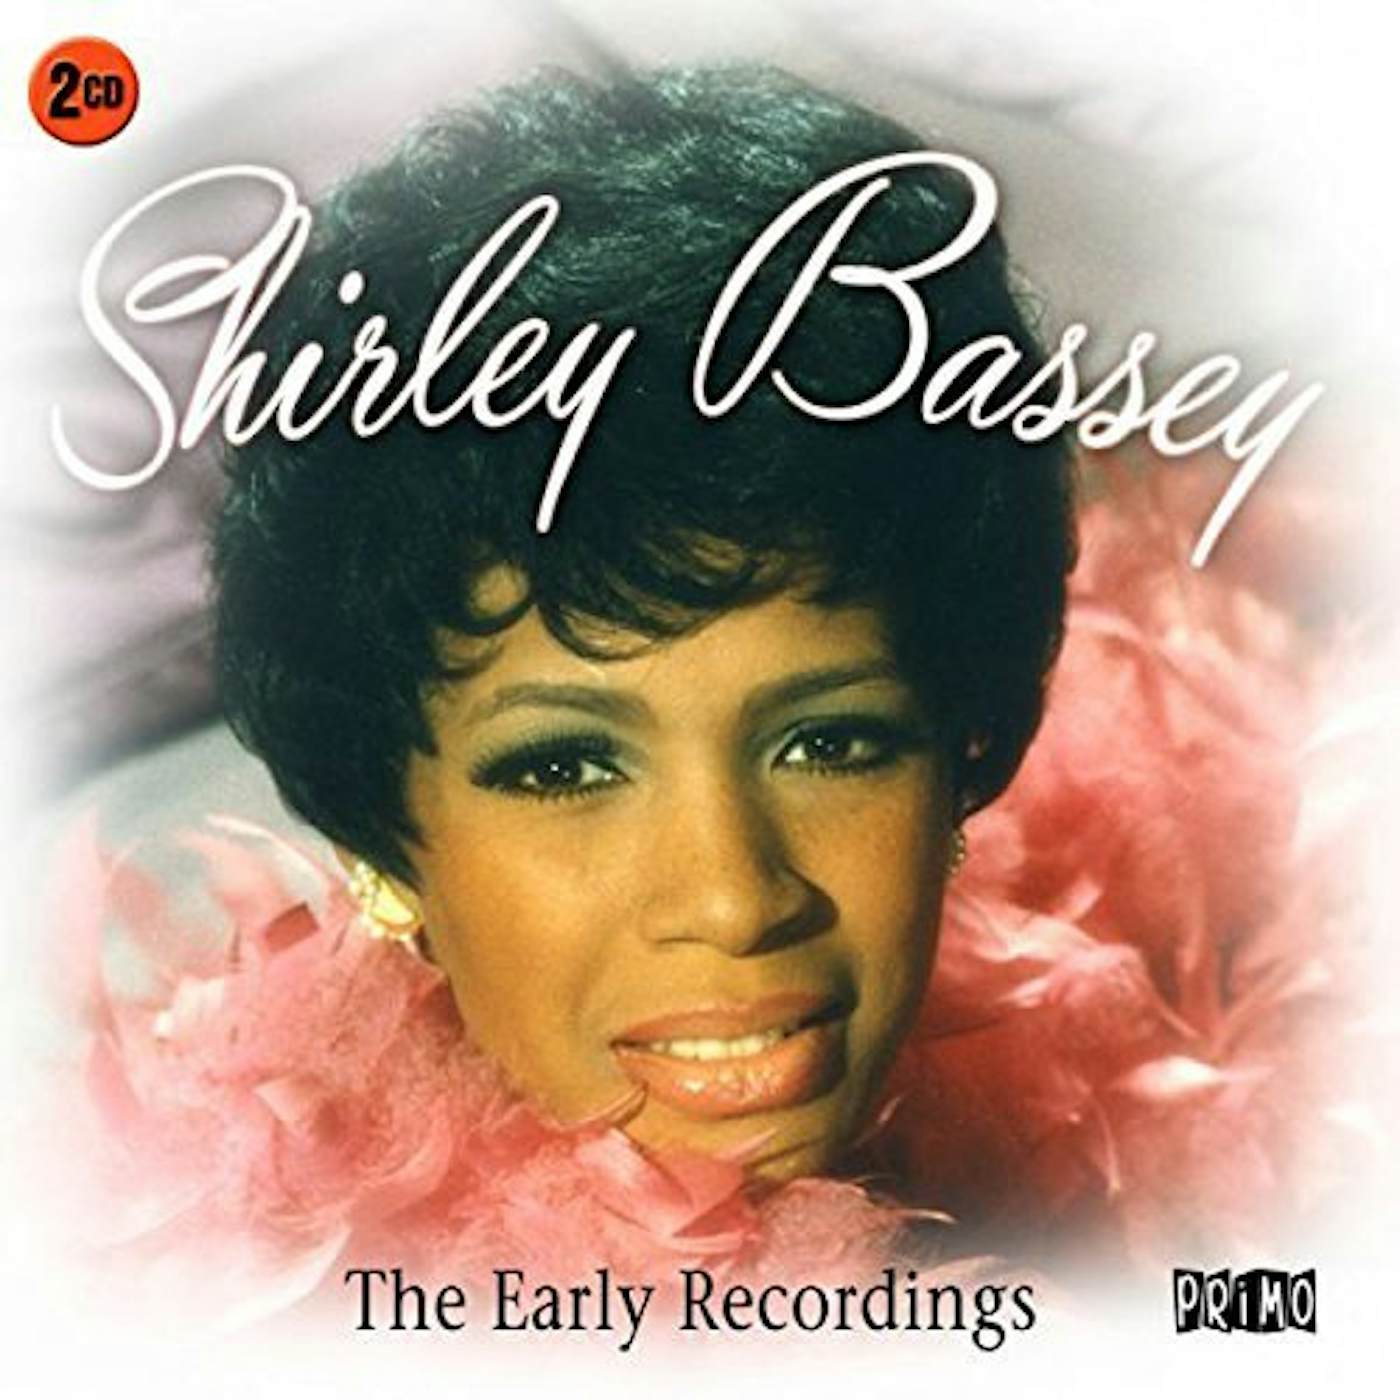 Shirley Bassey EARLY RECORDINGS CD